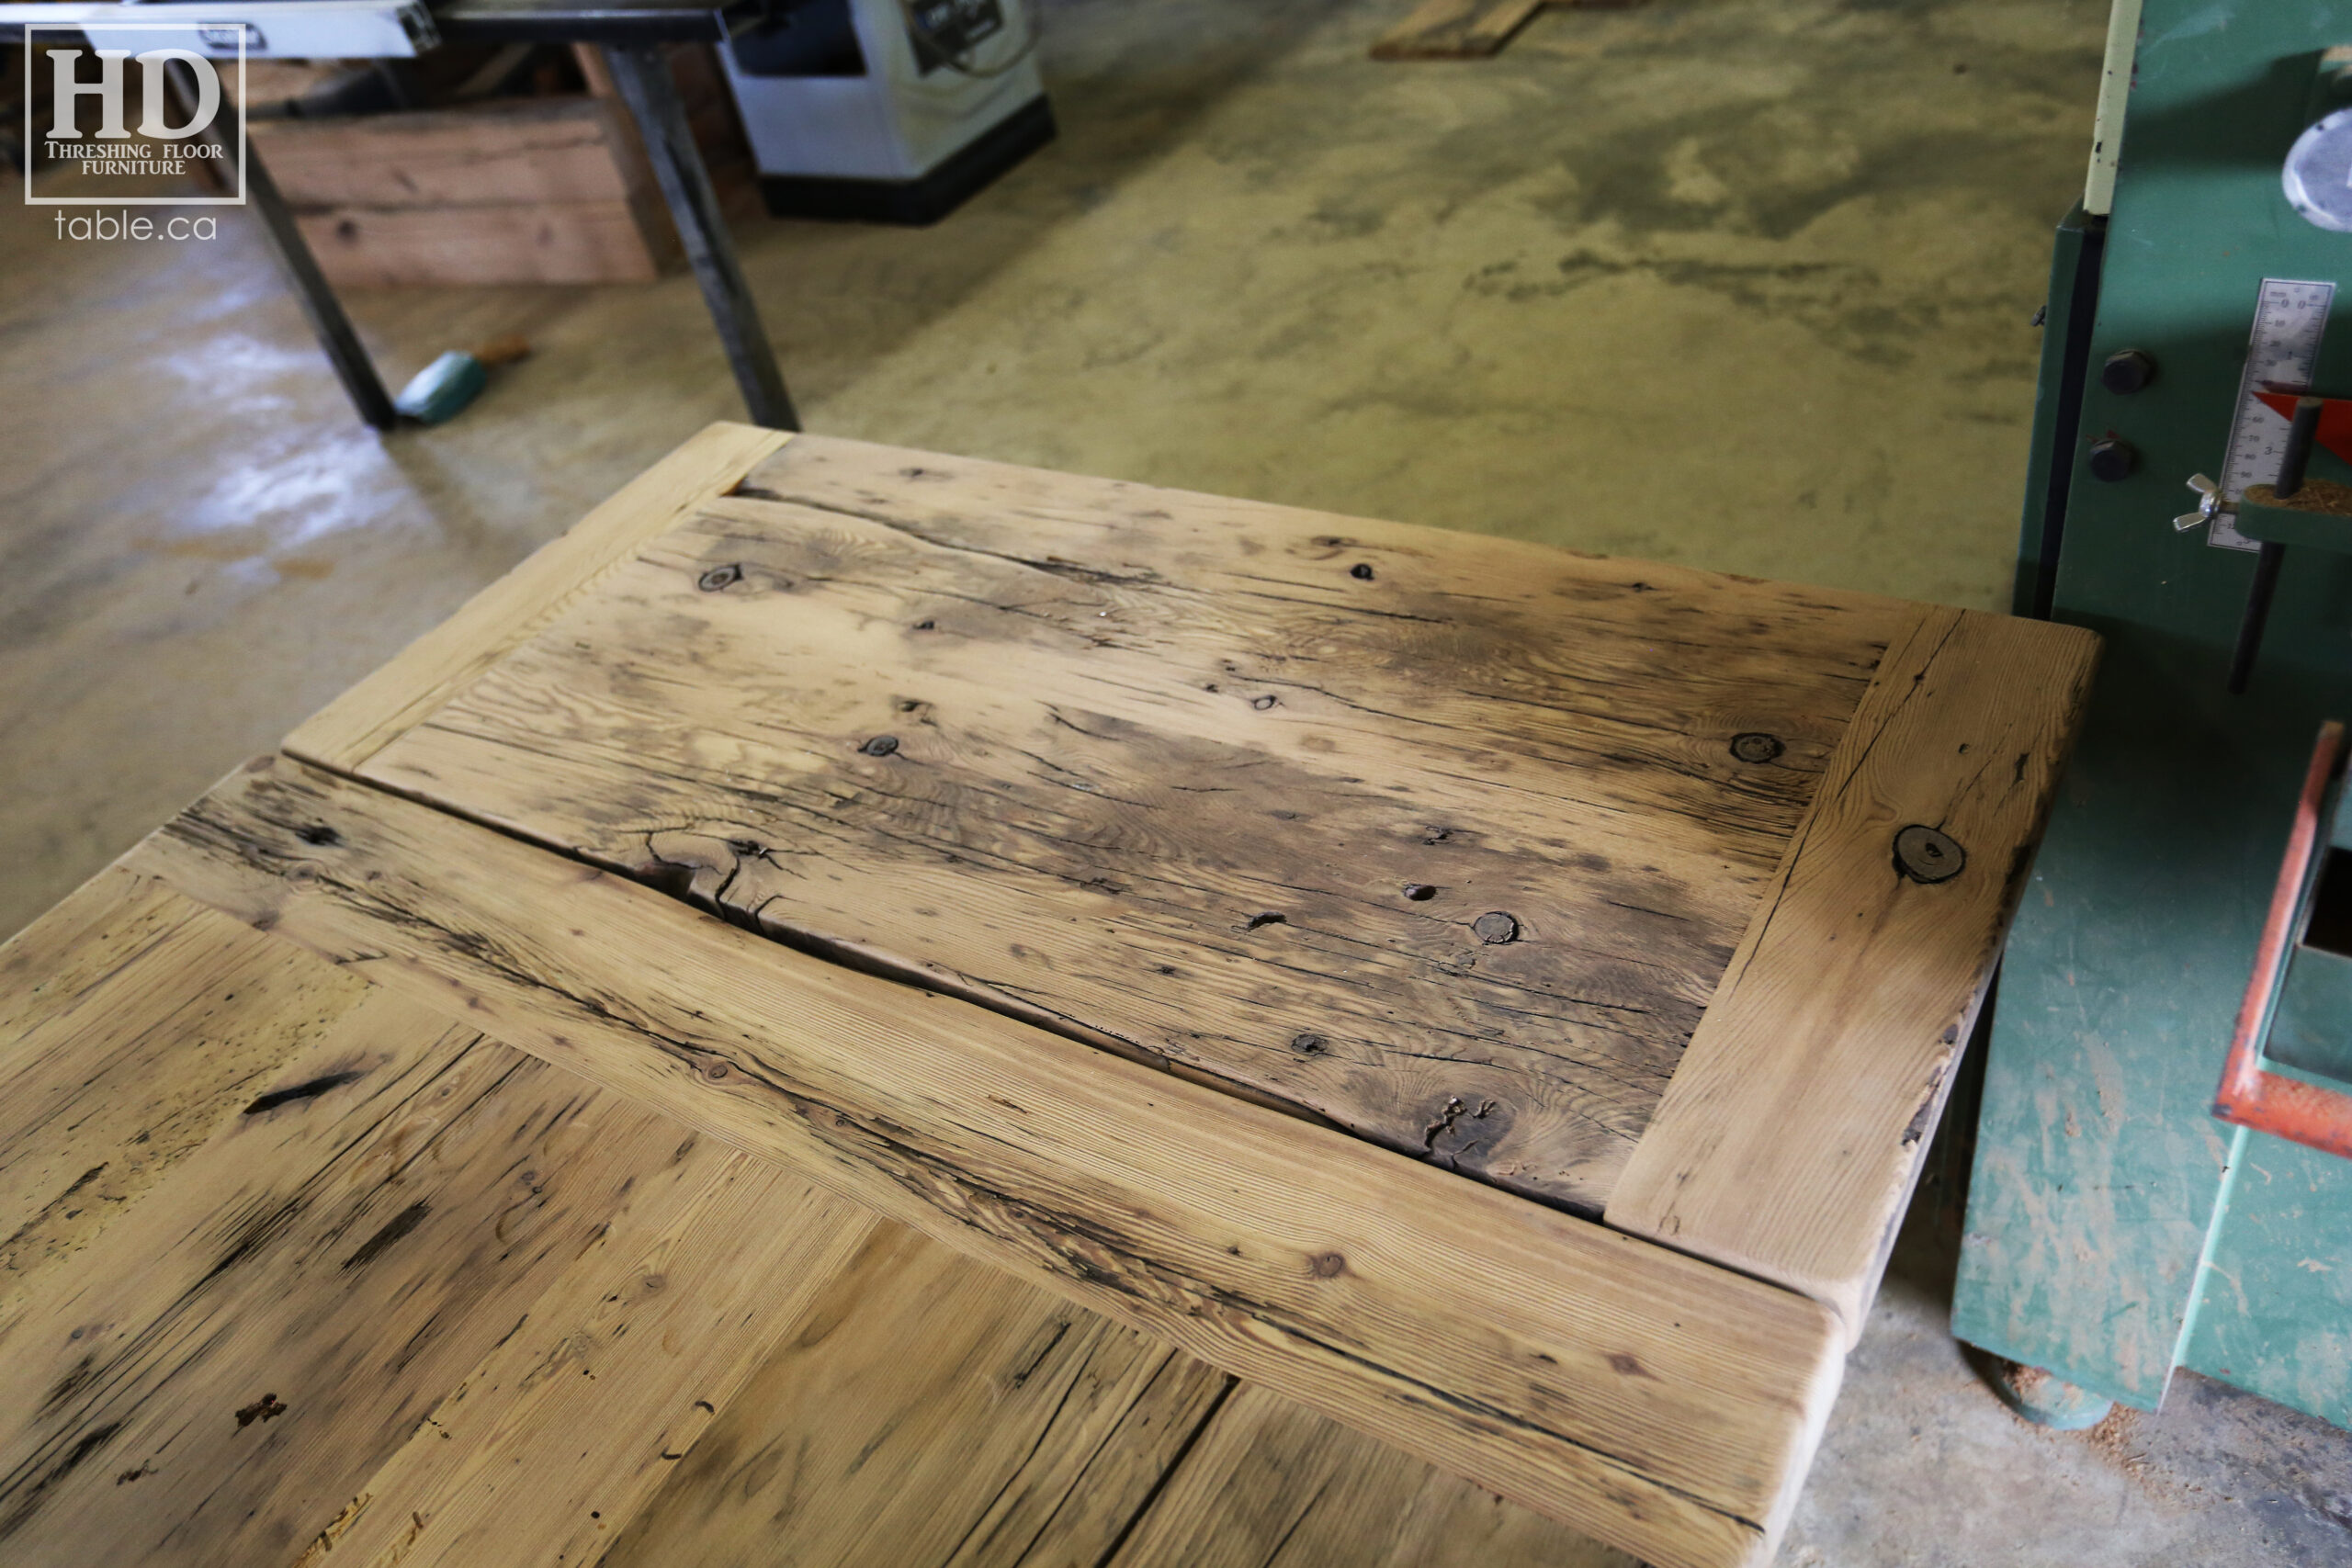 Rustic Reclaimed Barnwood Table by HD Threshing Floor Furniture / www.table.ca